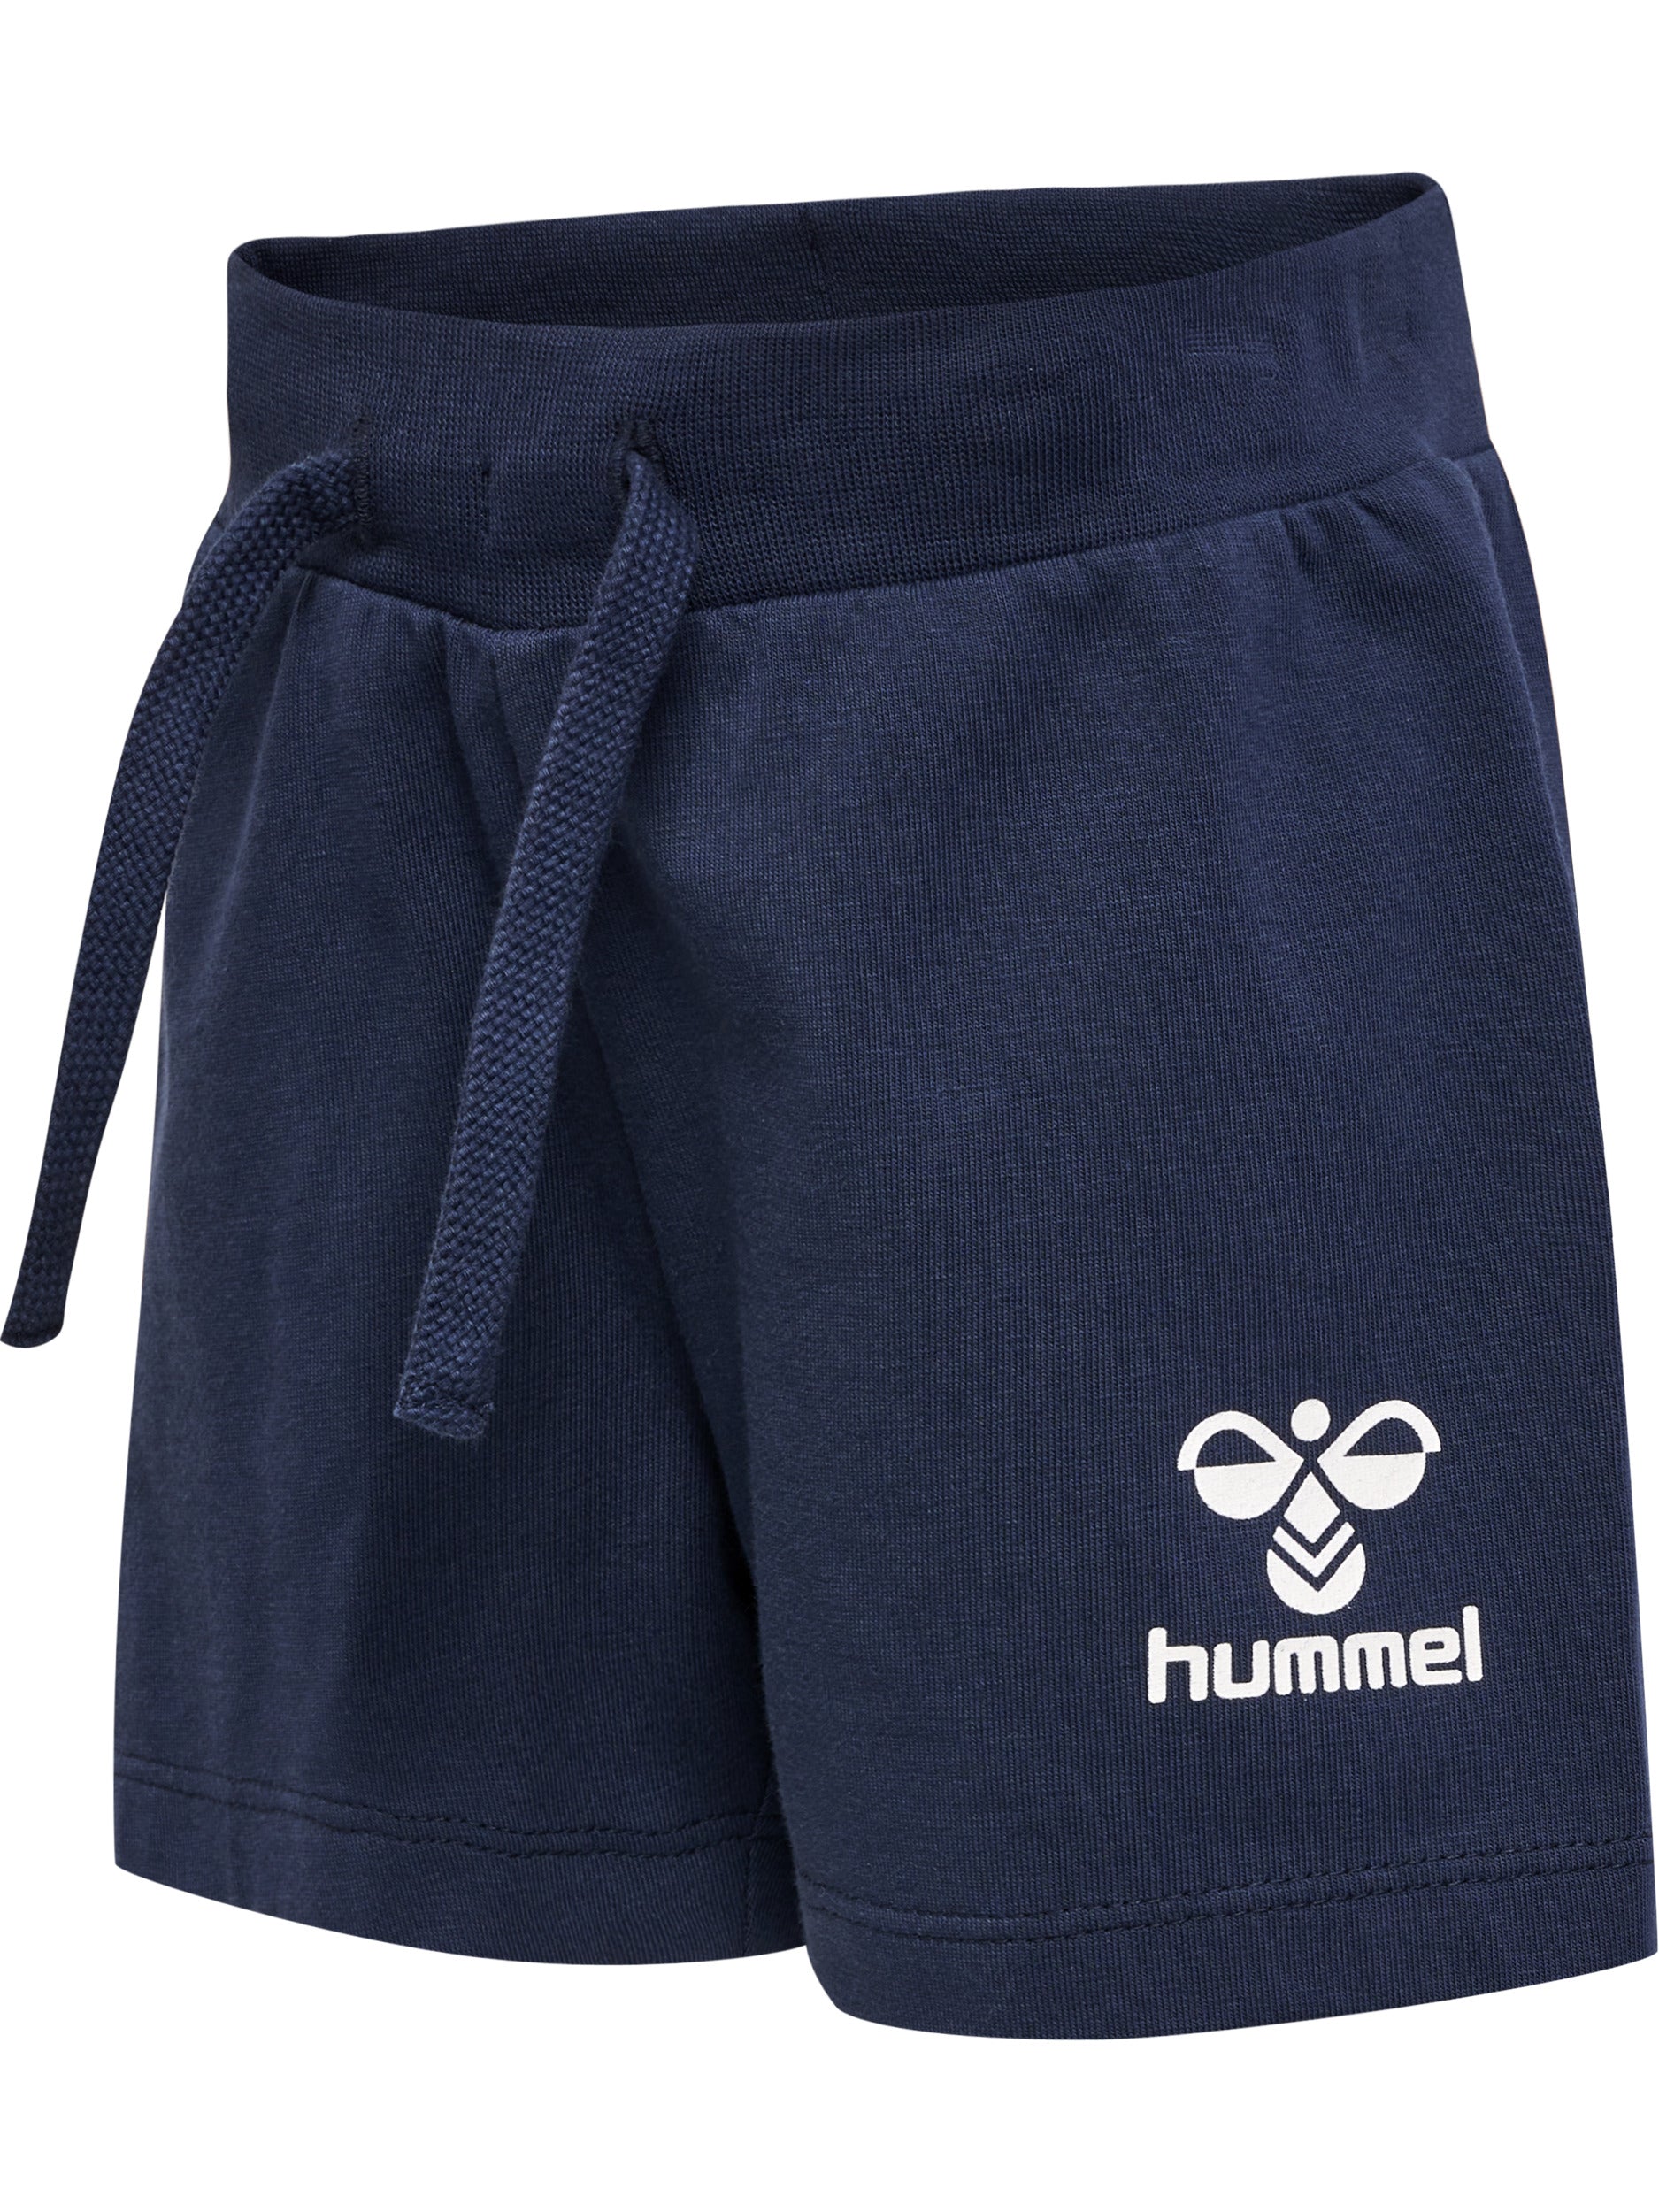 Hummel Shorts Joc - Hummel - Shorts - GladeRollinger.dk